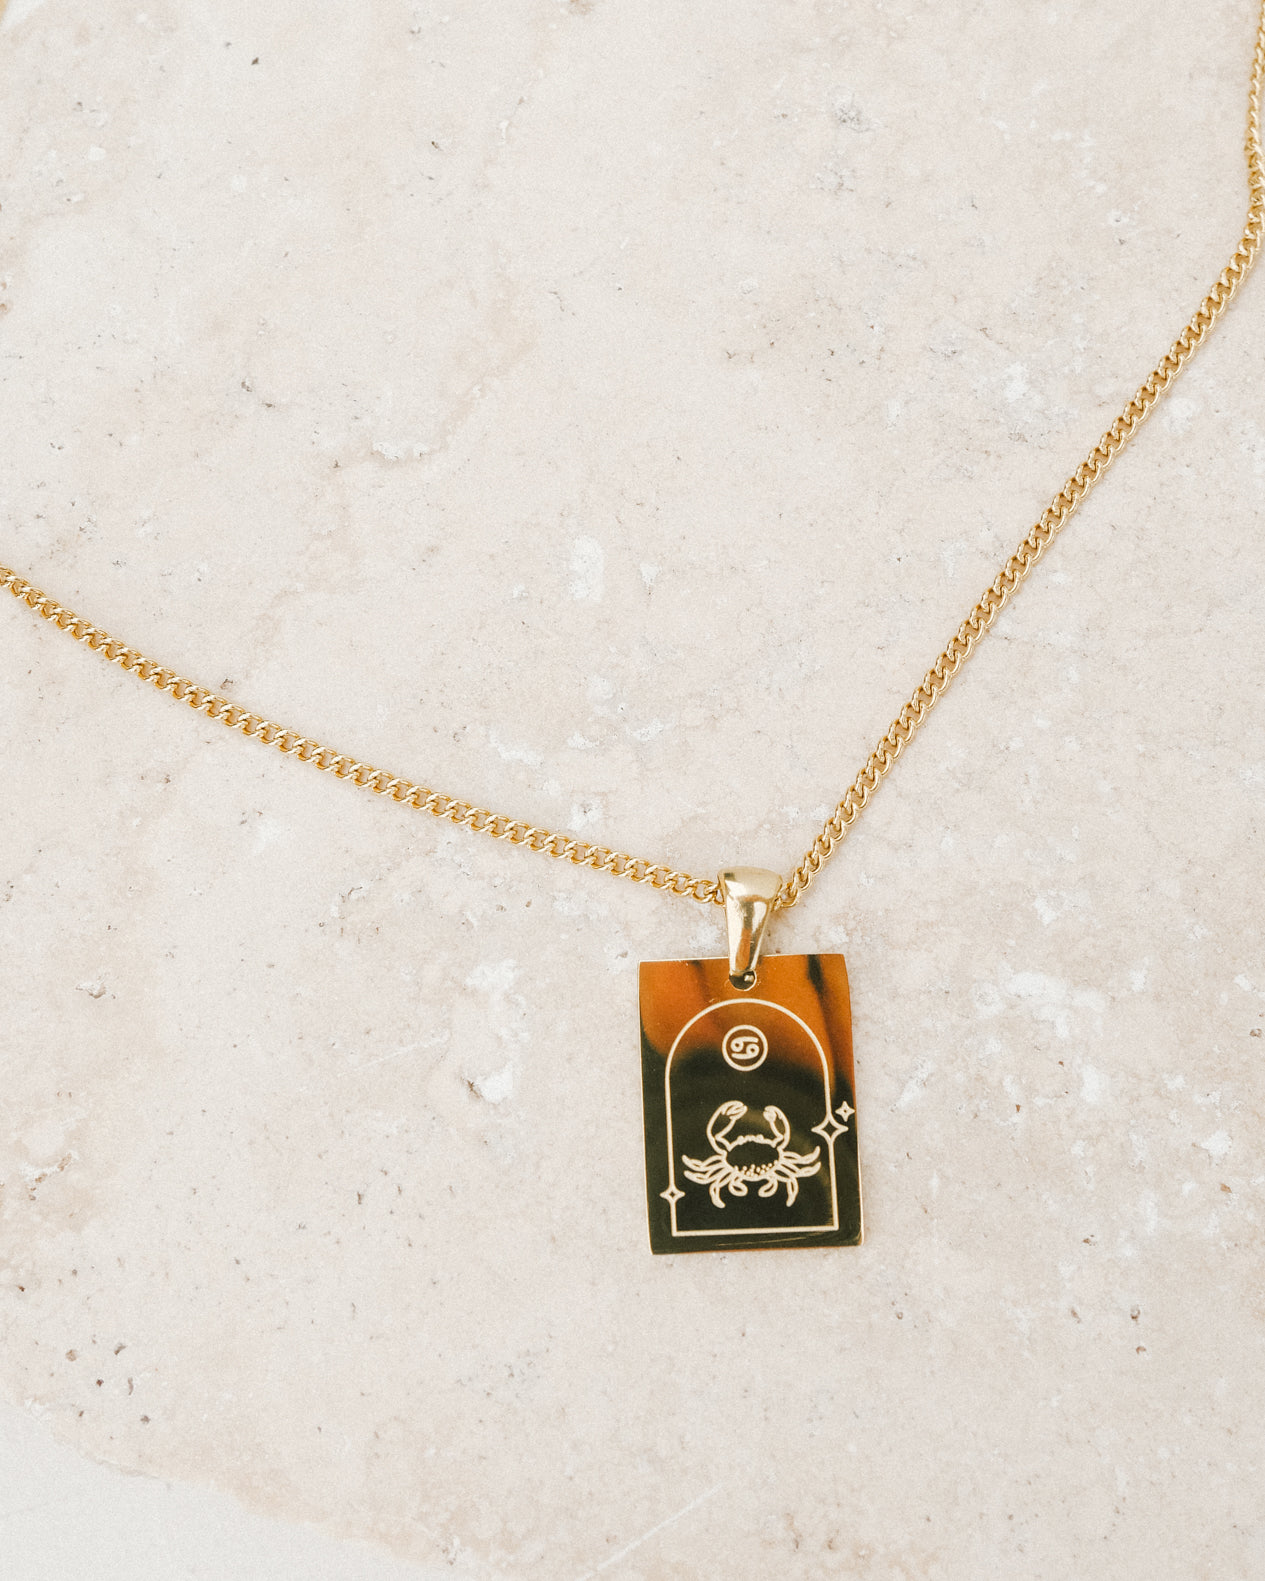 Celeste & Rae 14k Gold Dipped Zodiac Cancer Necklace - Gold : Target